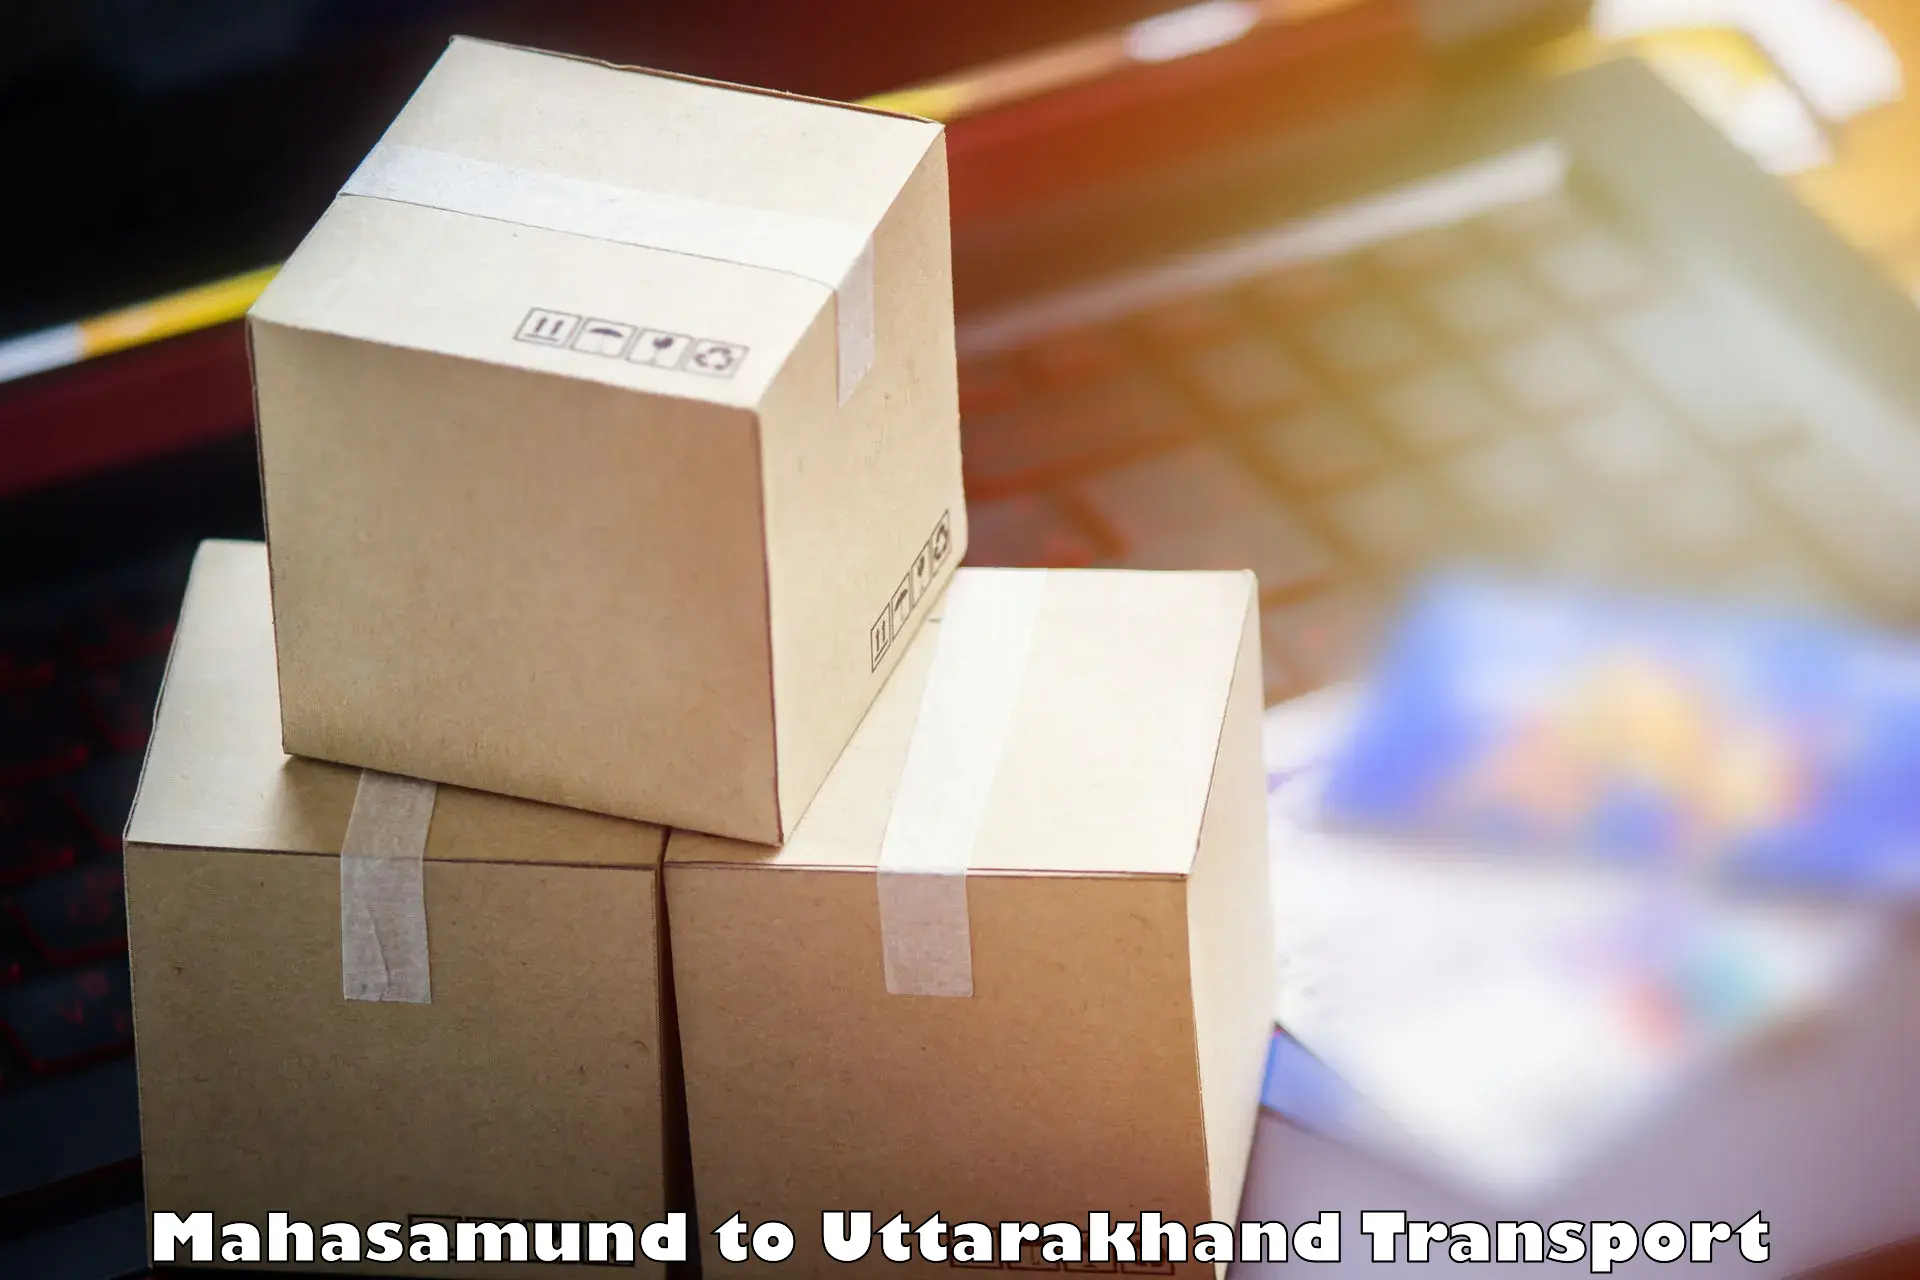 Delivery service Mahasamund to Karnaprayag